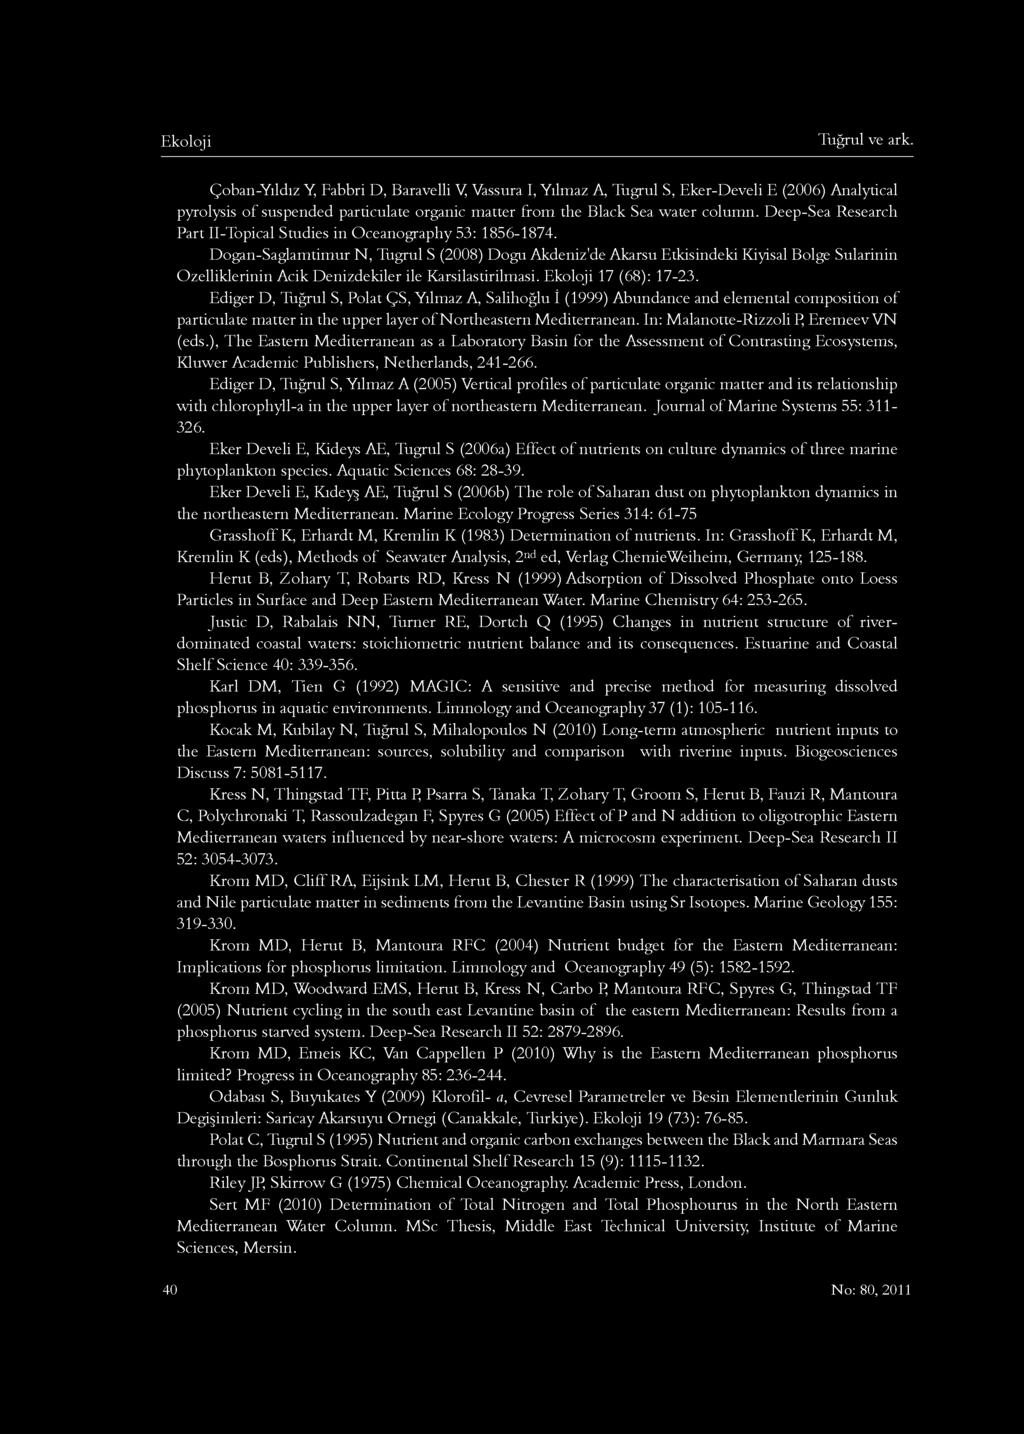 Tuğrul ve ark. Çoban-Yıldız Y, Fabbri D, Baravelli V Vassura I, Yılmaz A, Tugrul S, Eker-Develi E (2006) Analytical pyrolysis of suspended particulate organic matter from the Black Sea water column.